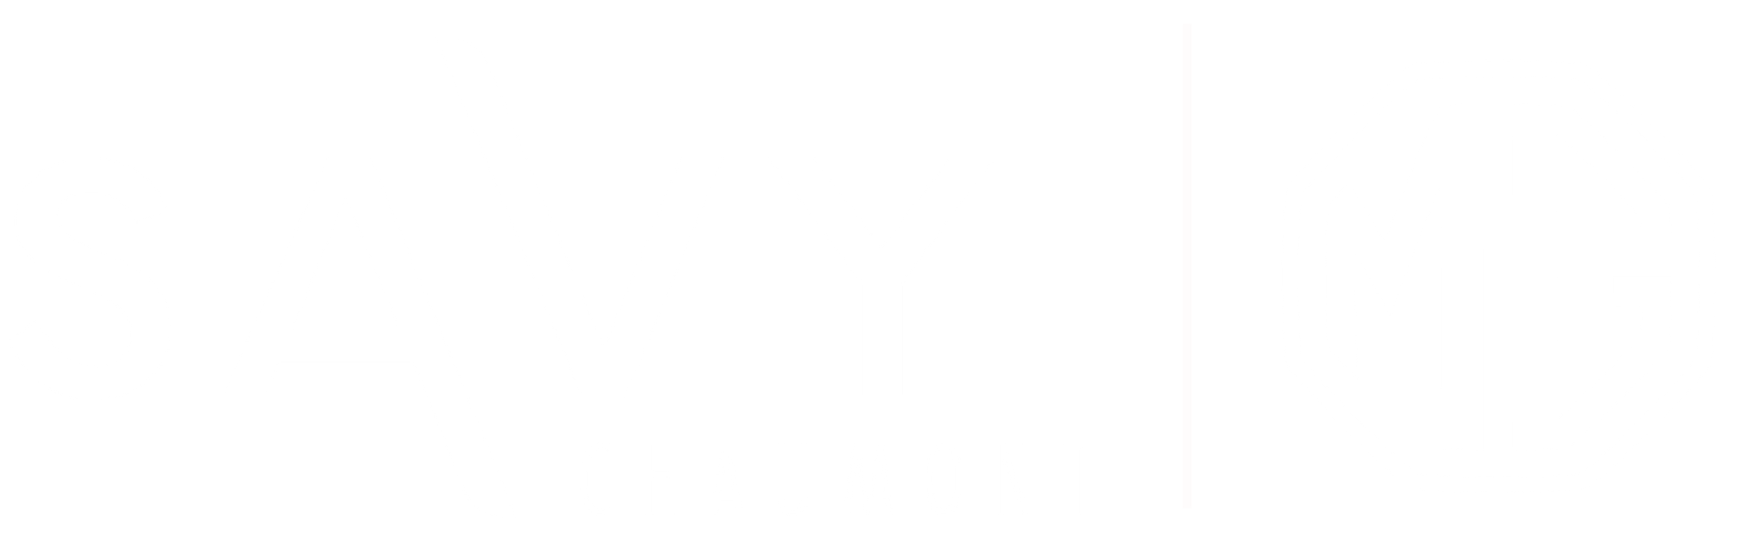 MG Motor Chaumont Groupe SAVY